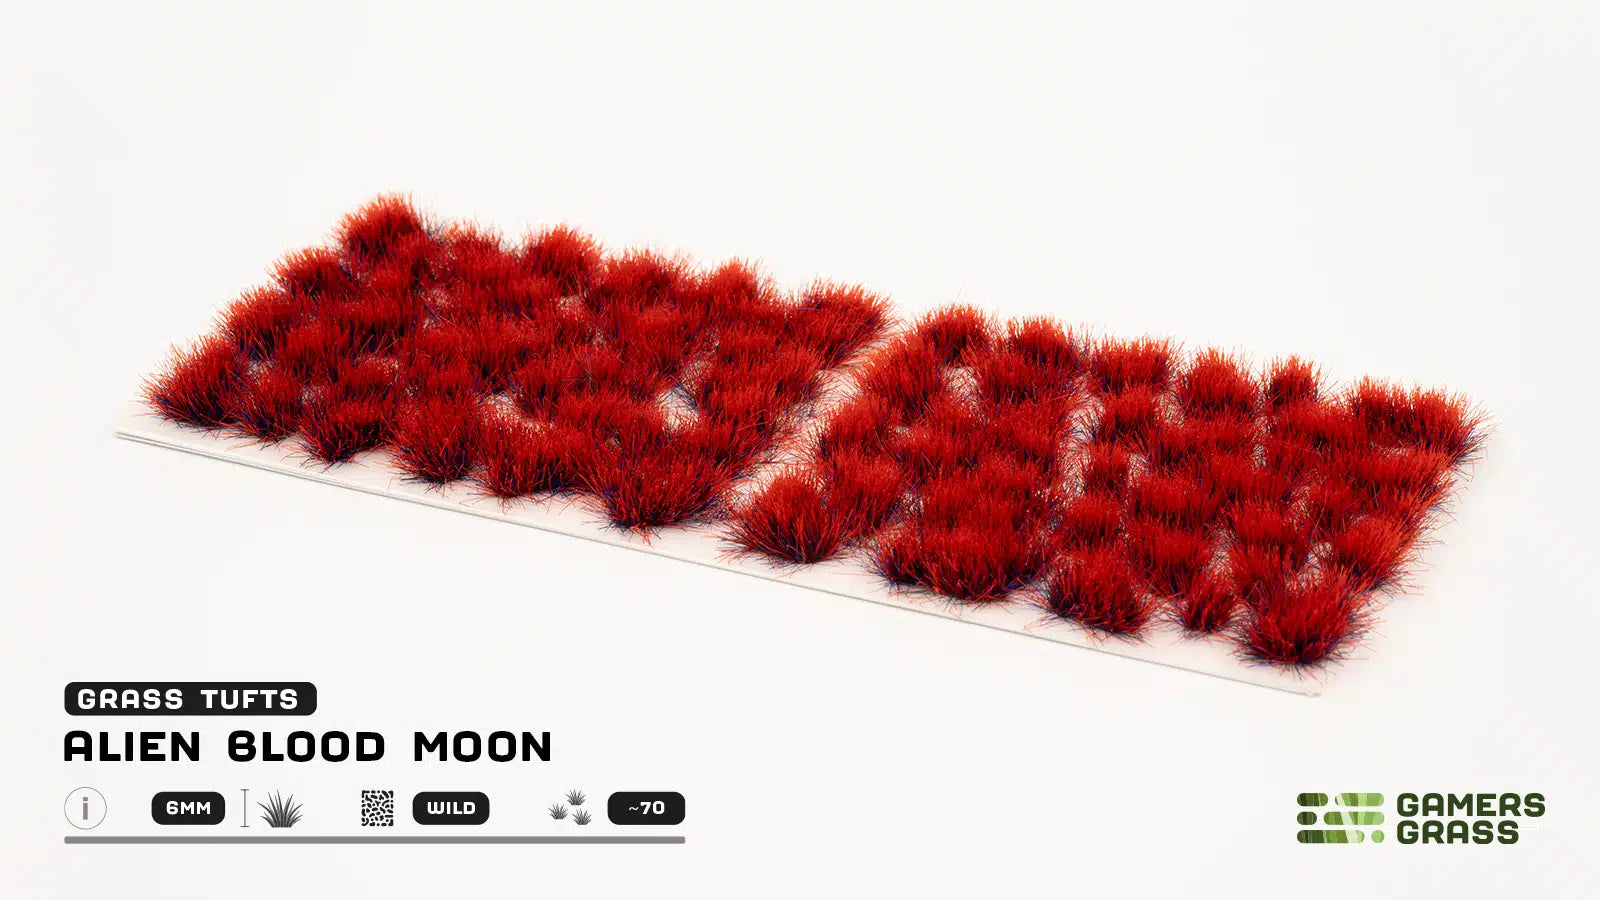 Alien Blood Moon 6mm Tufts (Wild) - Gamers Grass - 0